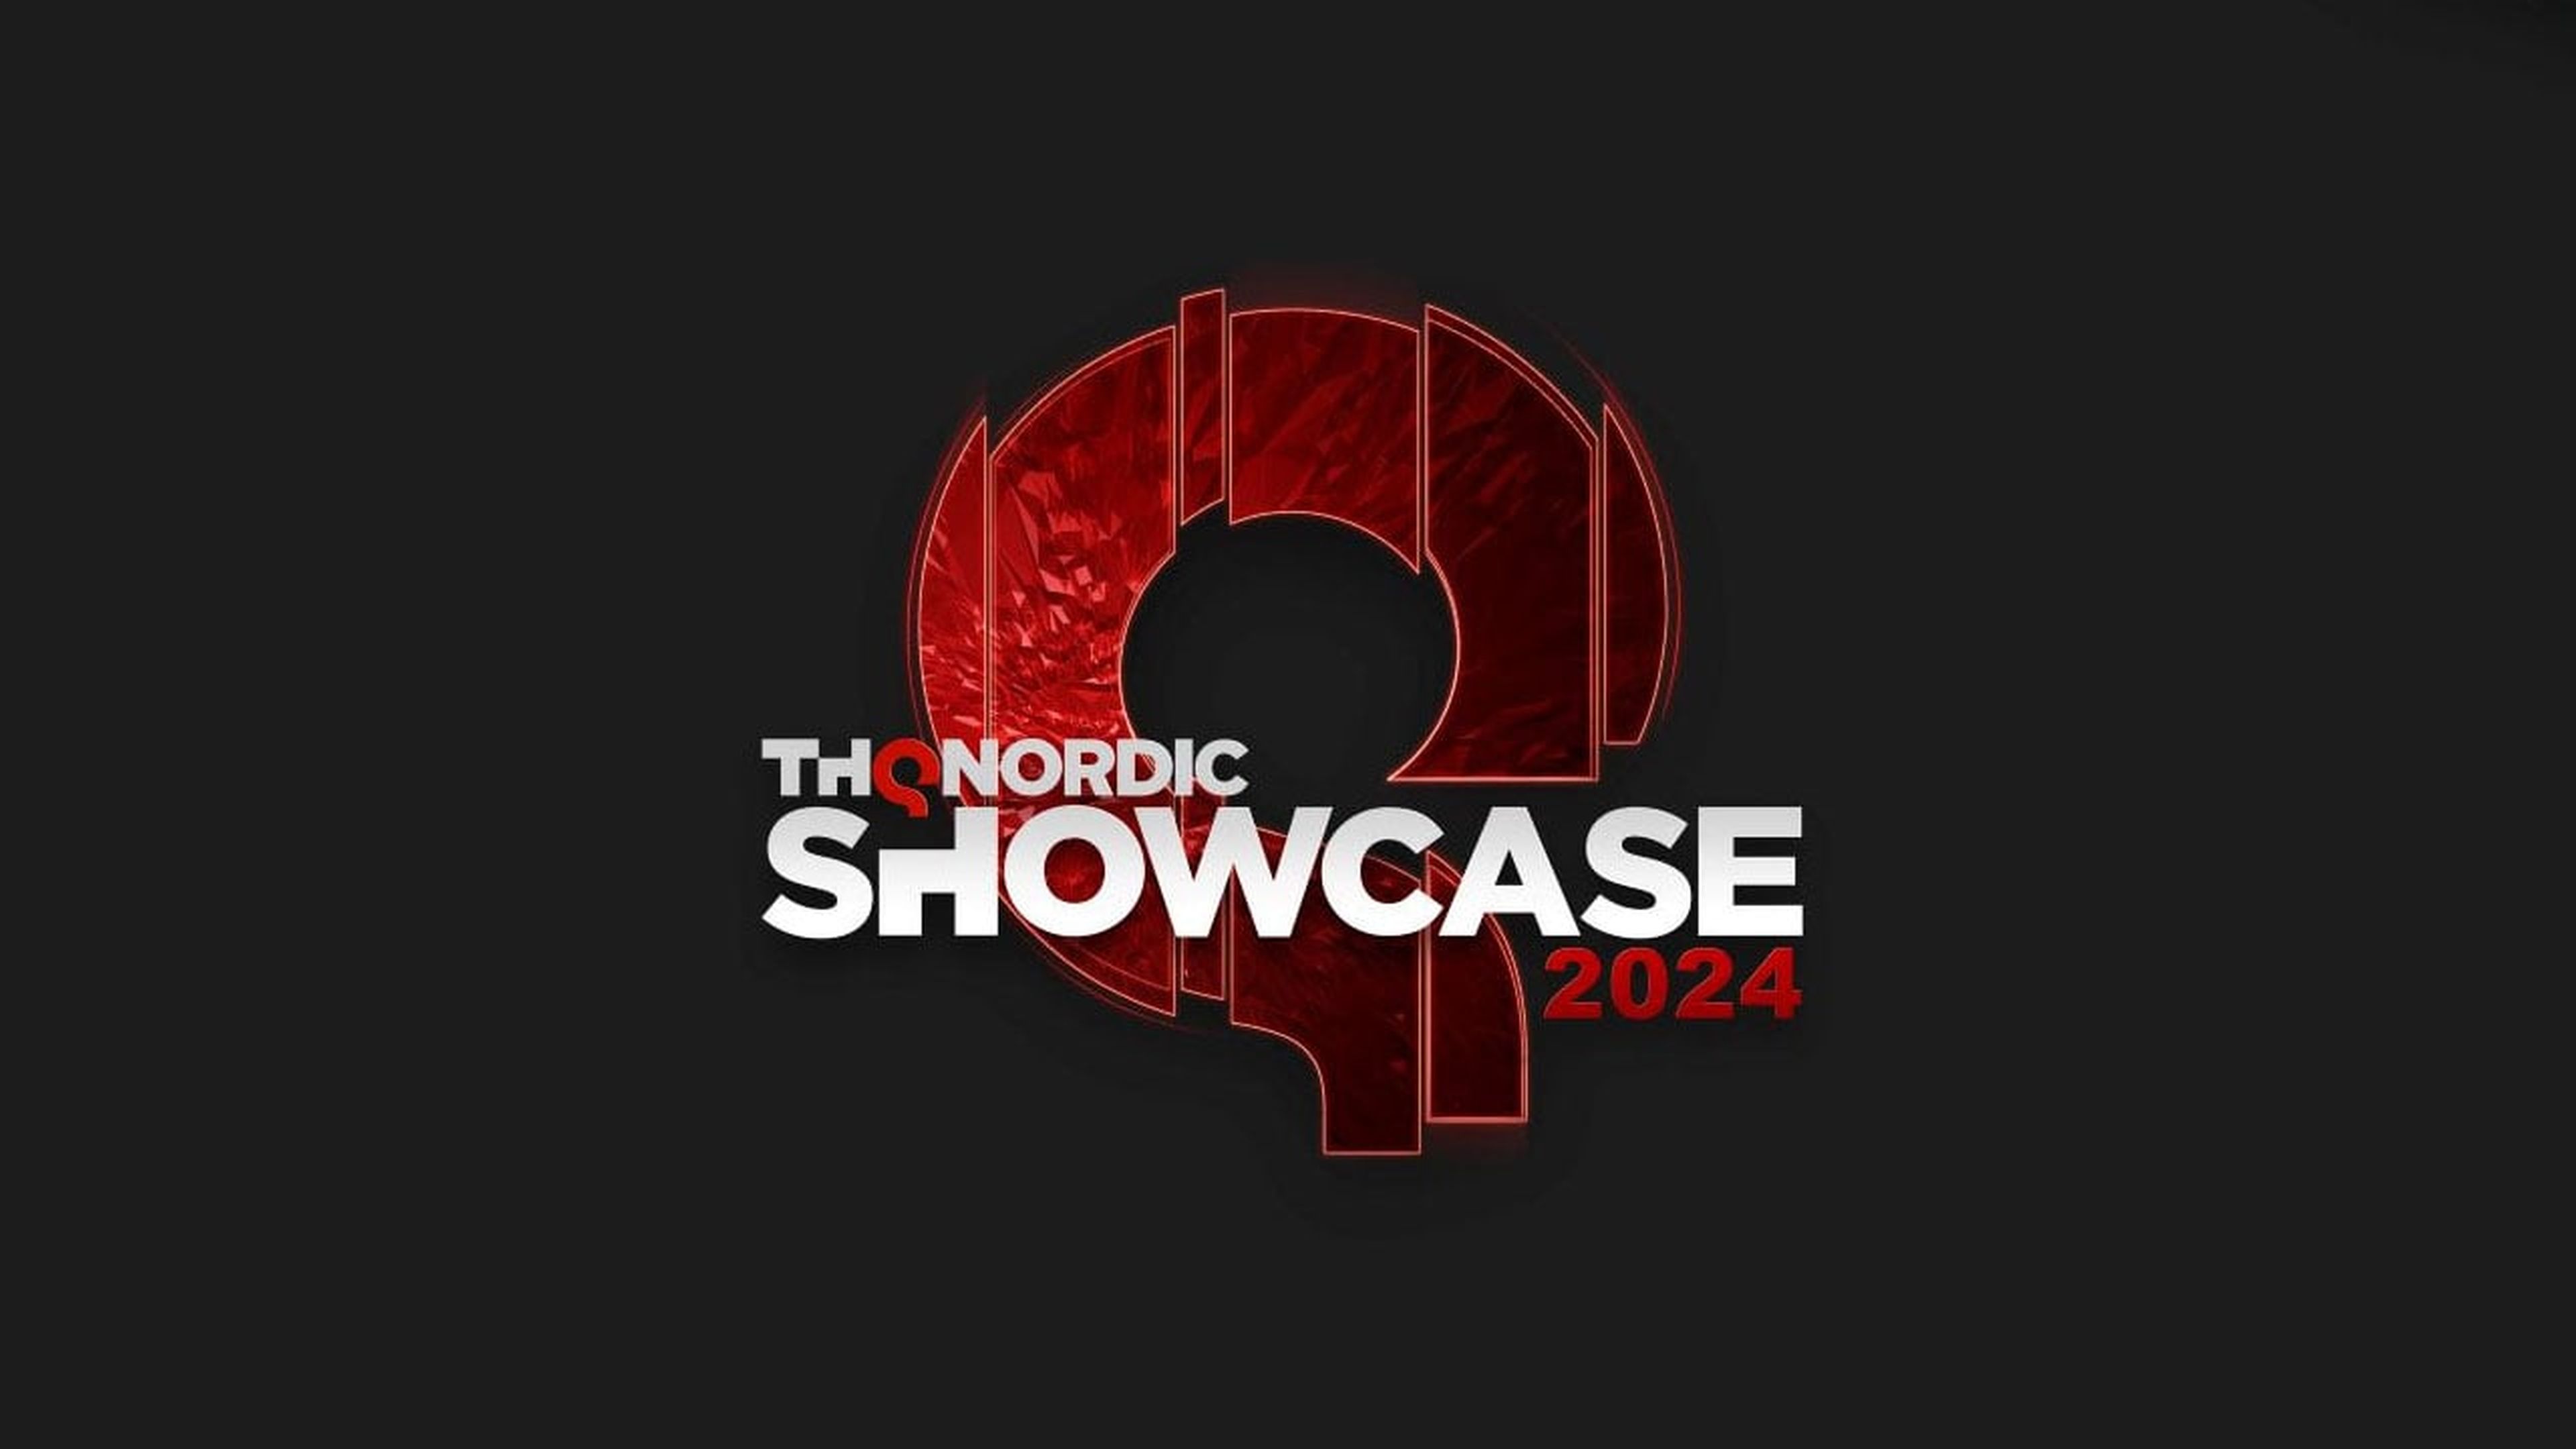 THQ Nordic Showcase 2024